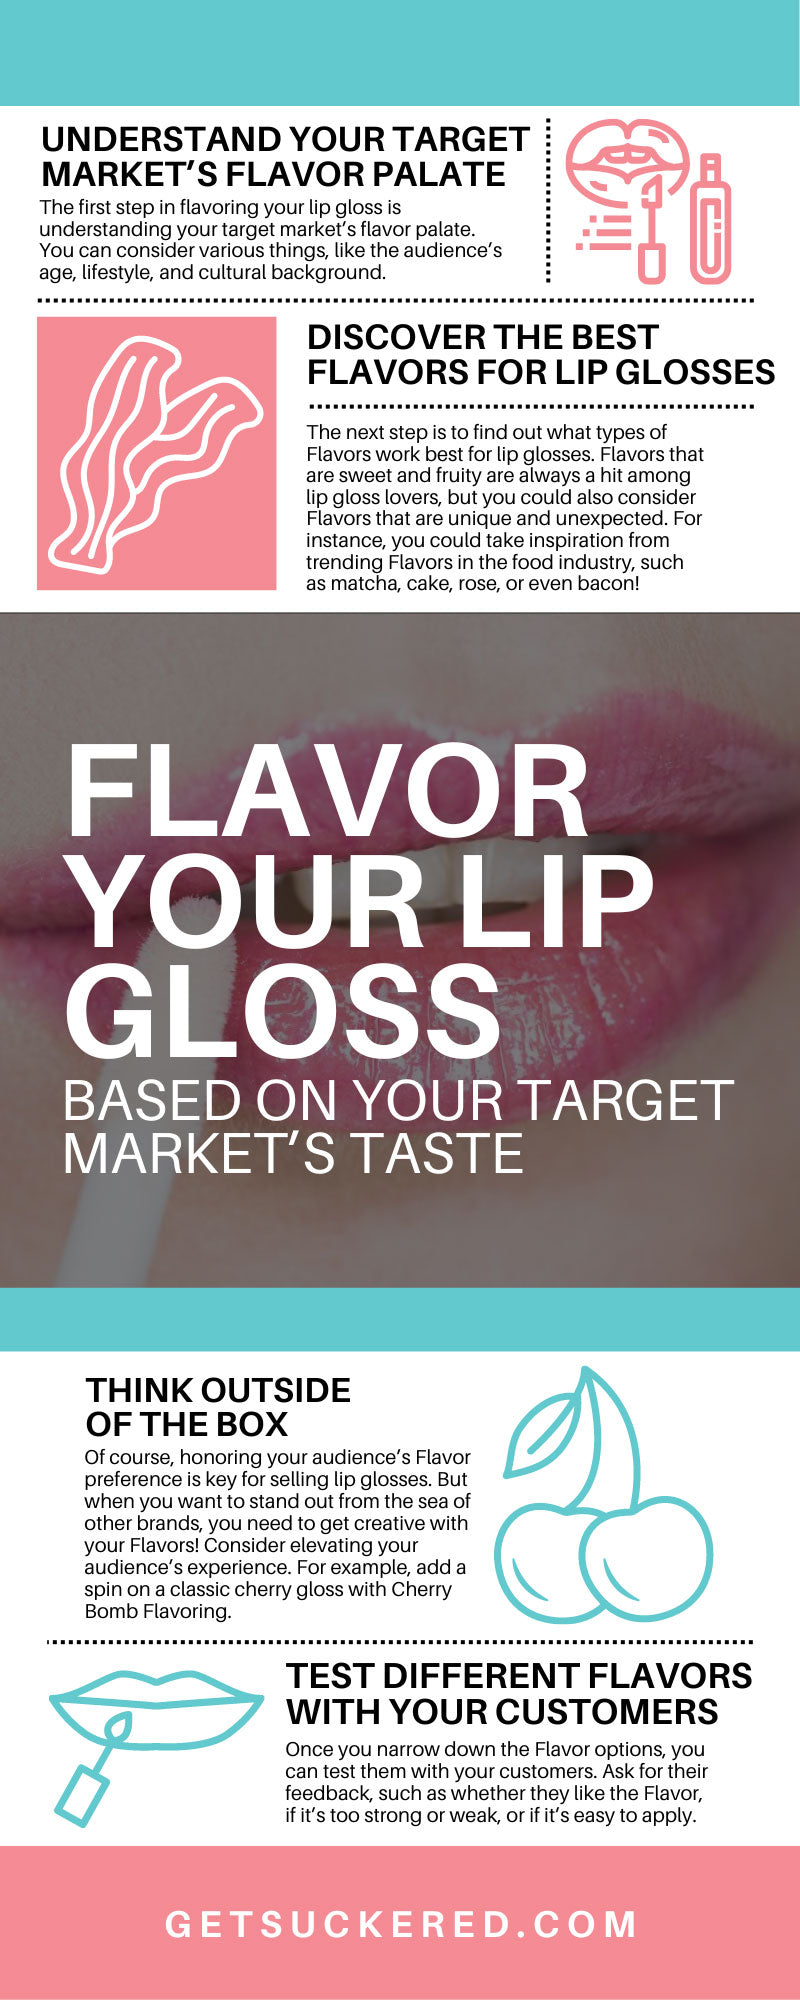 Flavor Your Lip Gloss Based on Your Target Market’s Taste